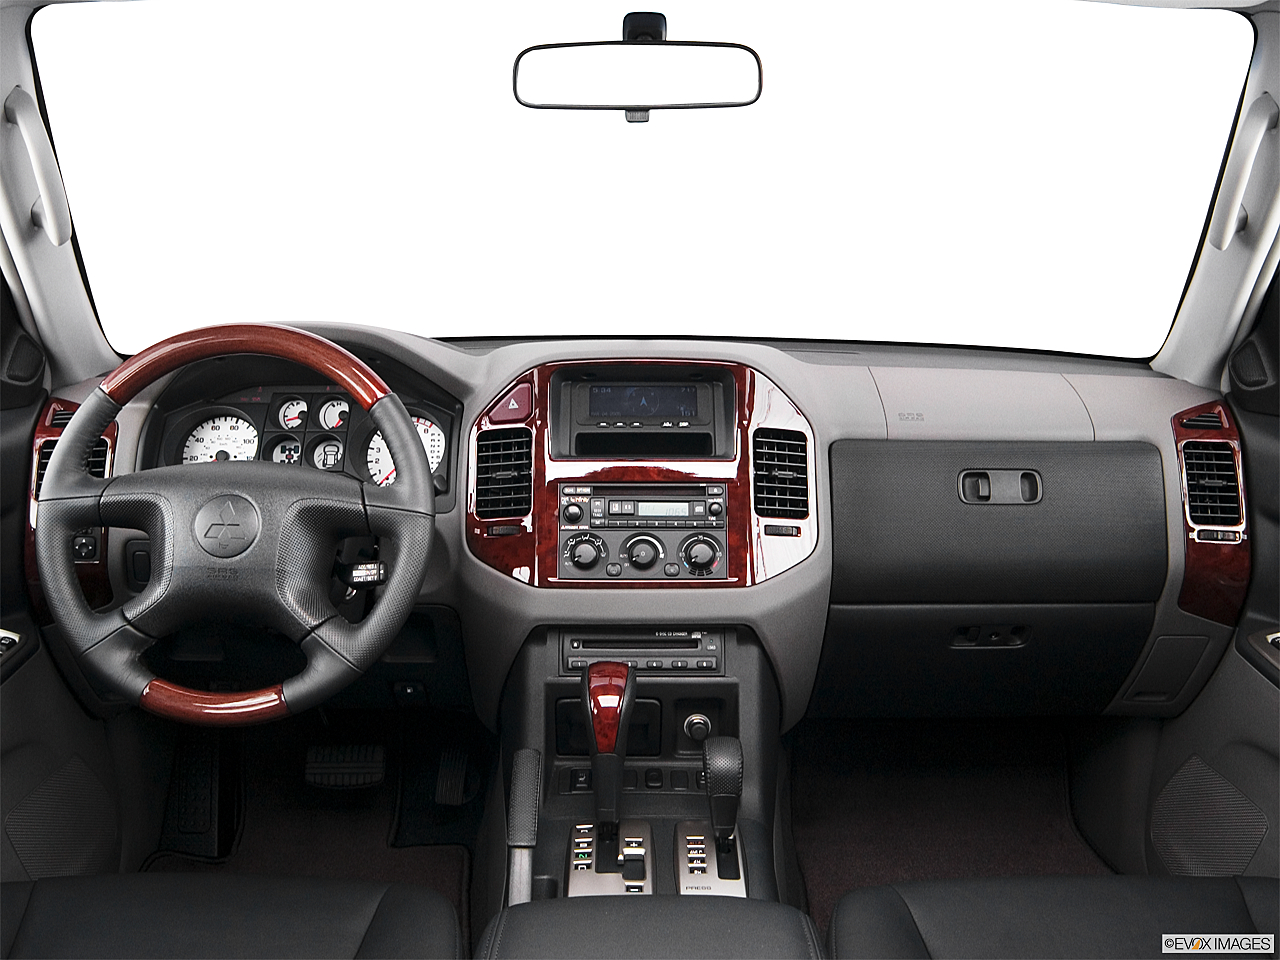 2005 Mitsubishi Montero Limited 4WD 4dr SUV - Research - GrooveCar